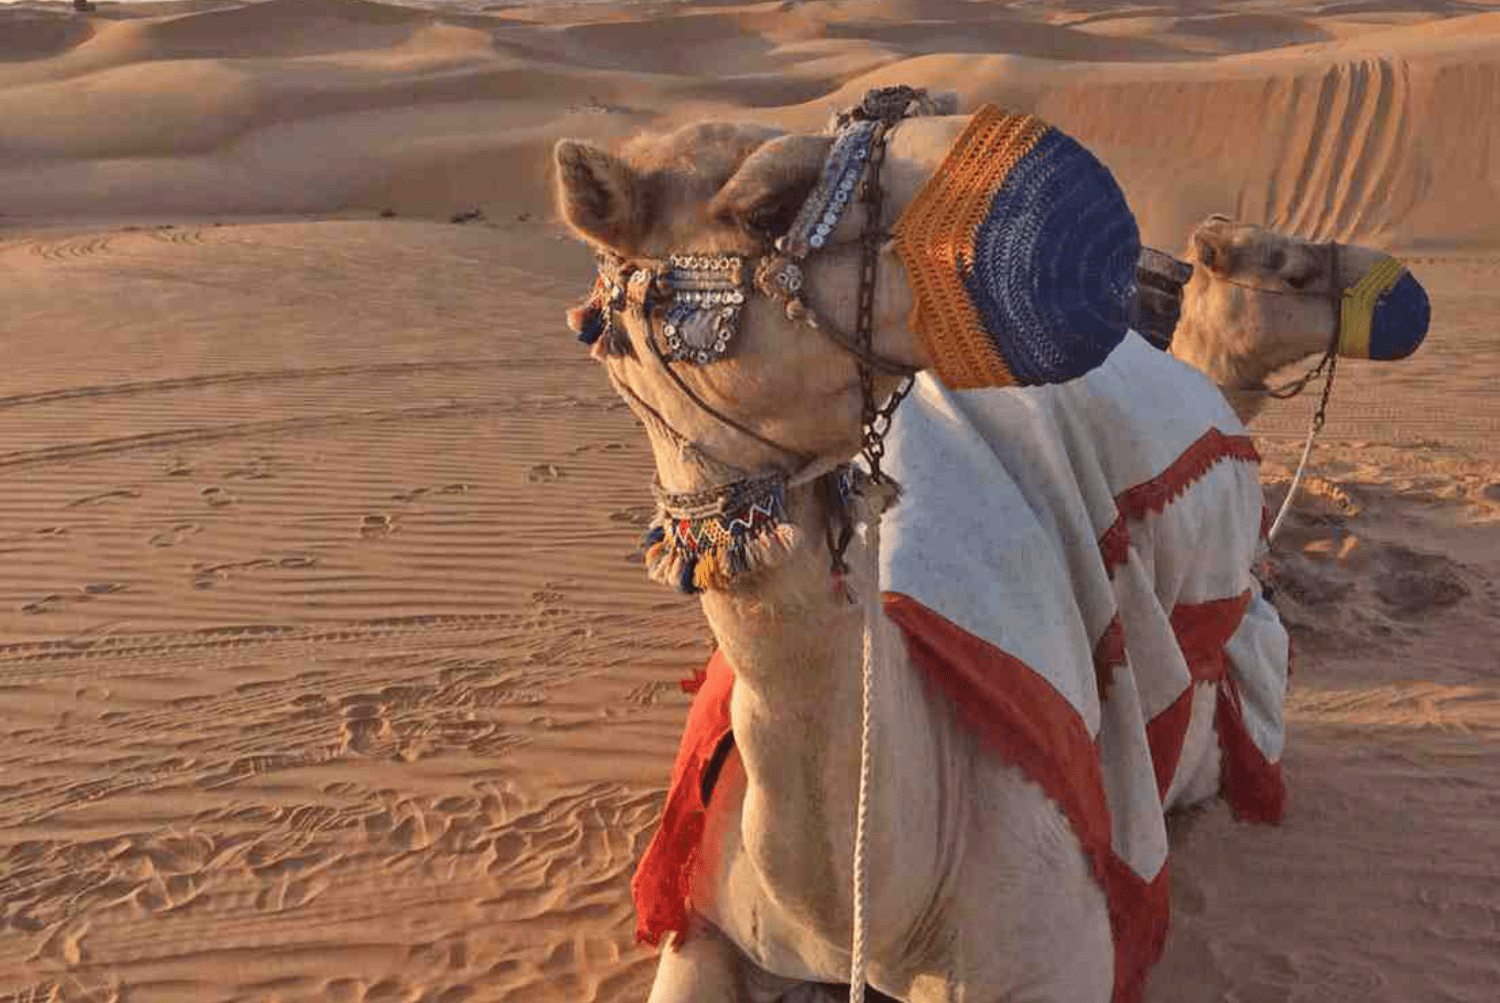 Abu Dhabi camel